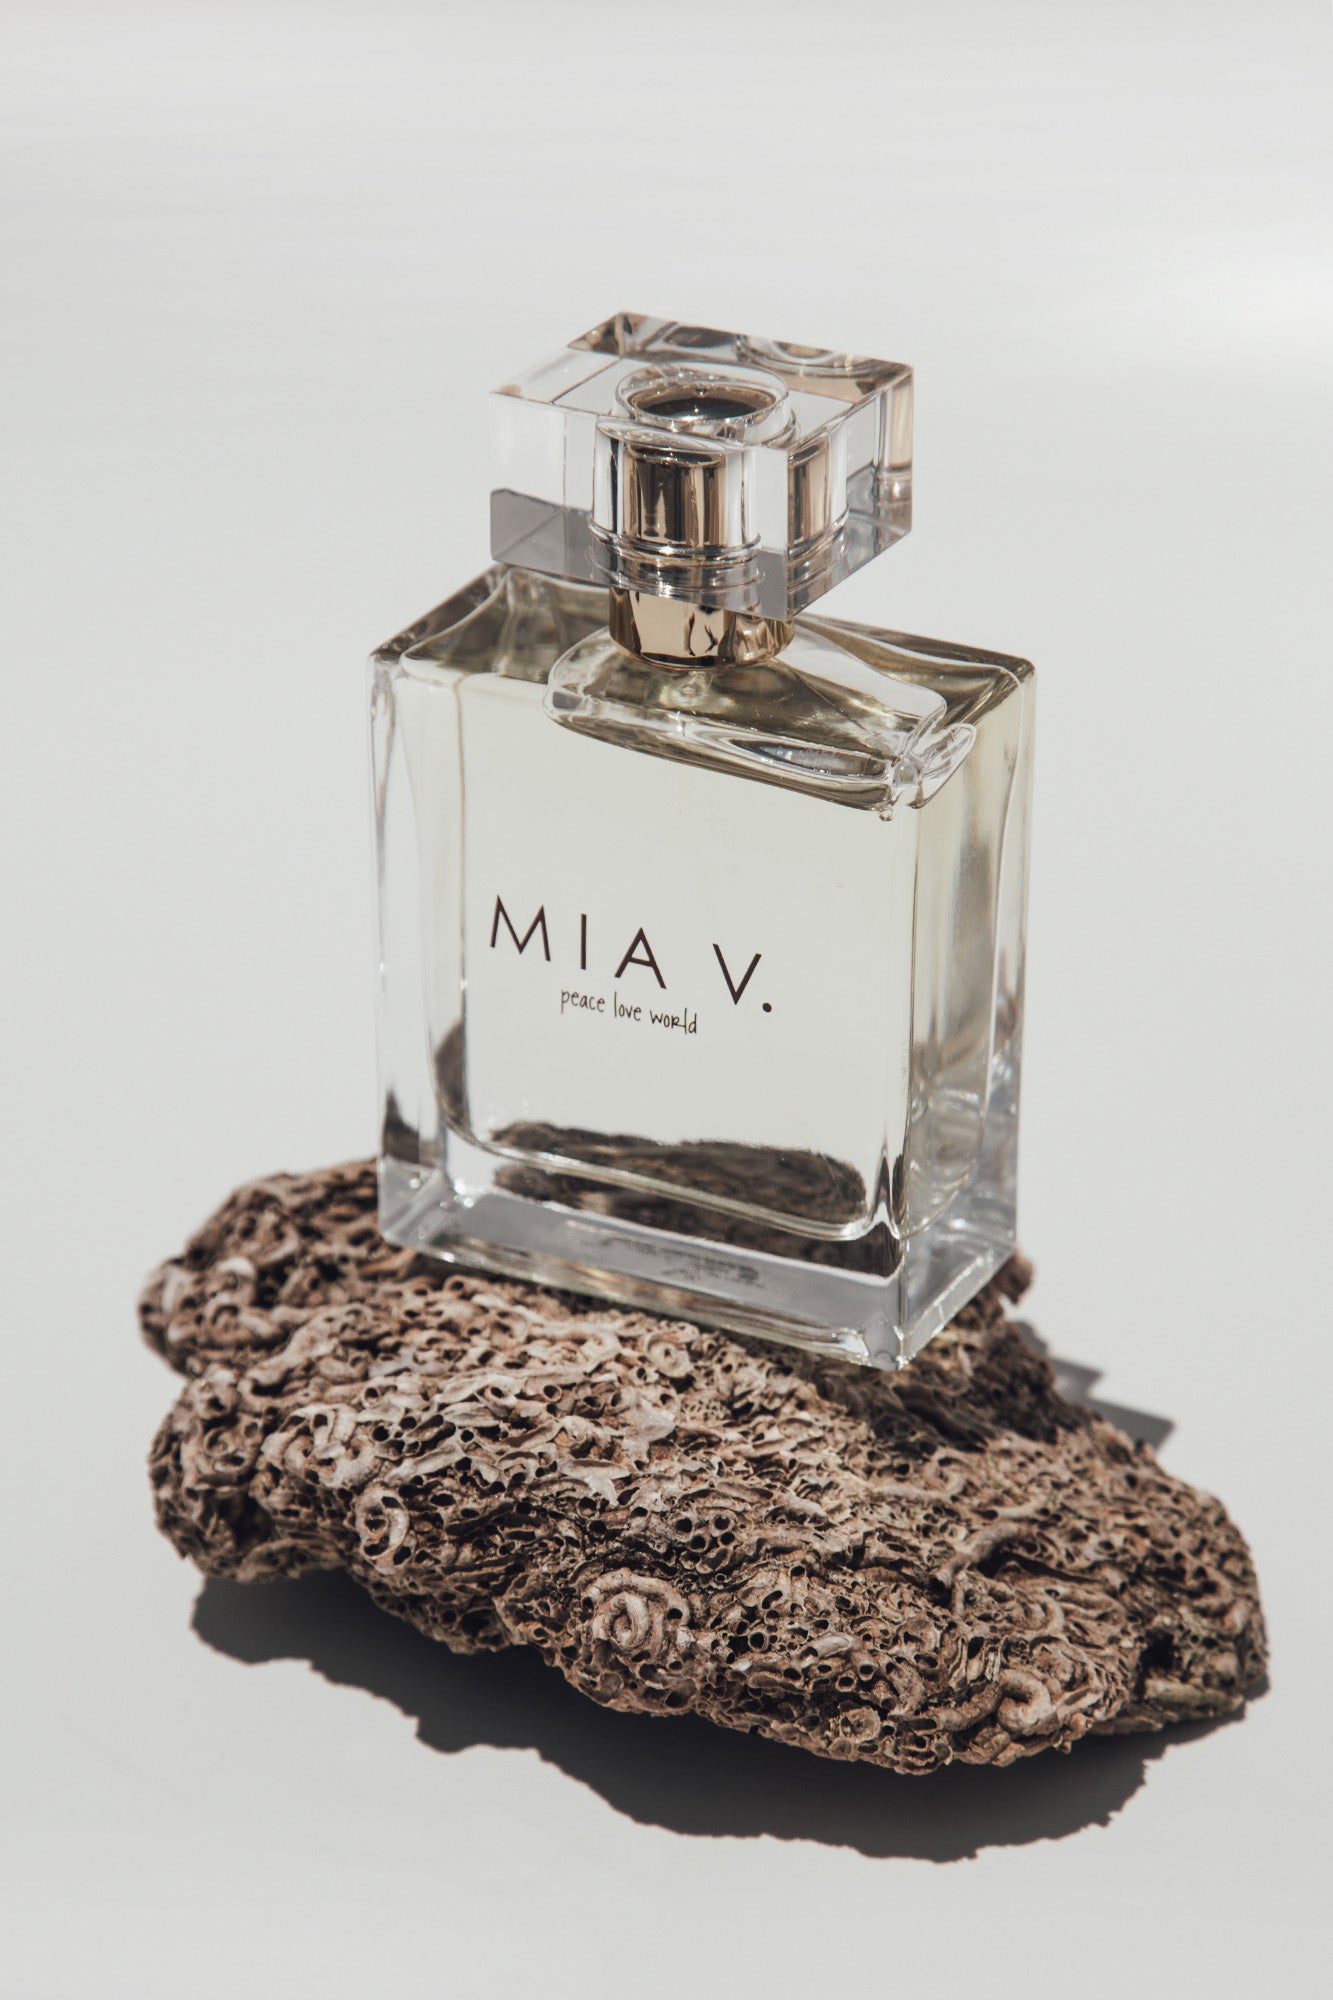 Dùng thử] Nước hoa Unisex LV Rhapsody 5ml/10ml/20ml Mia Mia Perfume